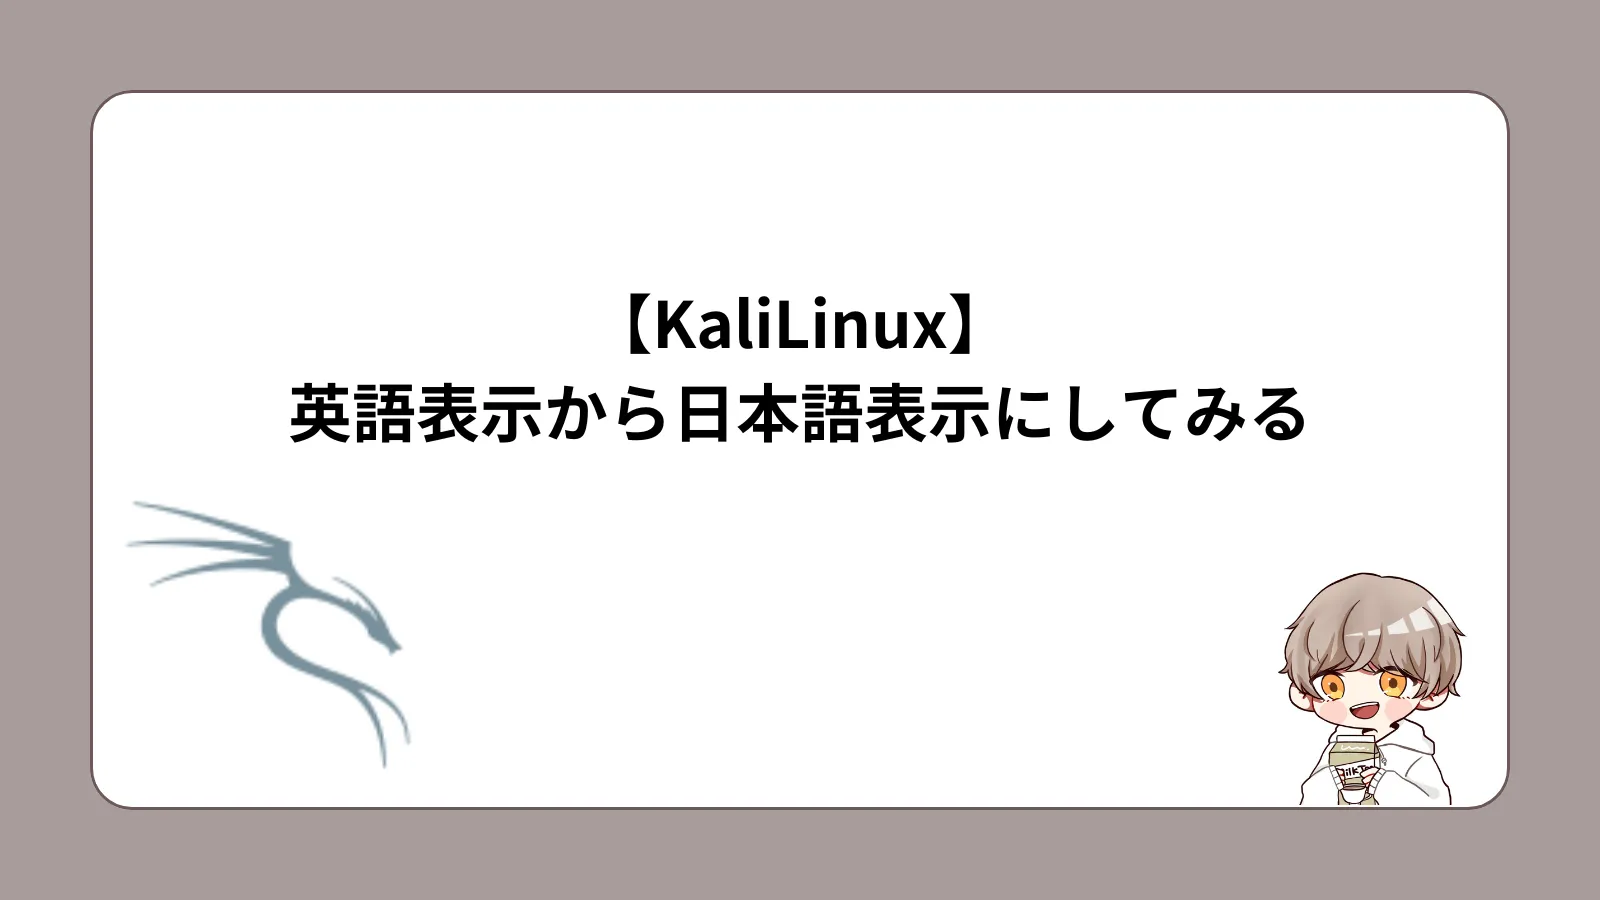 Kali Linux英語表示から日本語表示に変更する